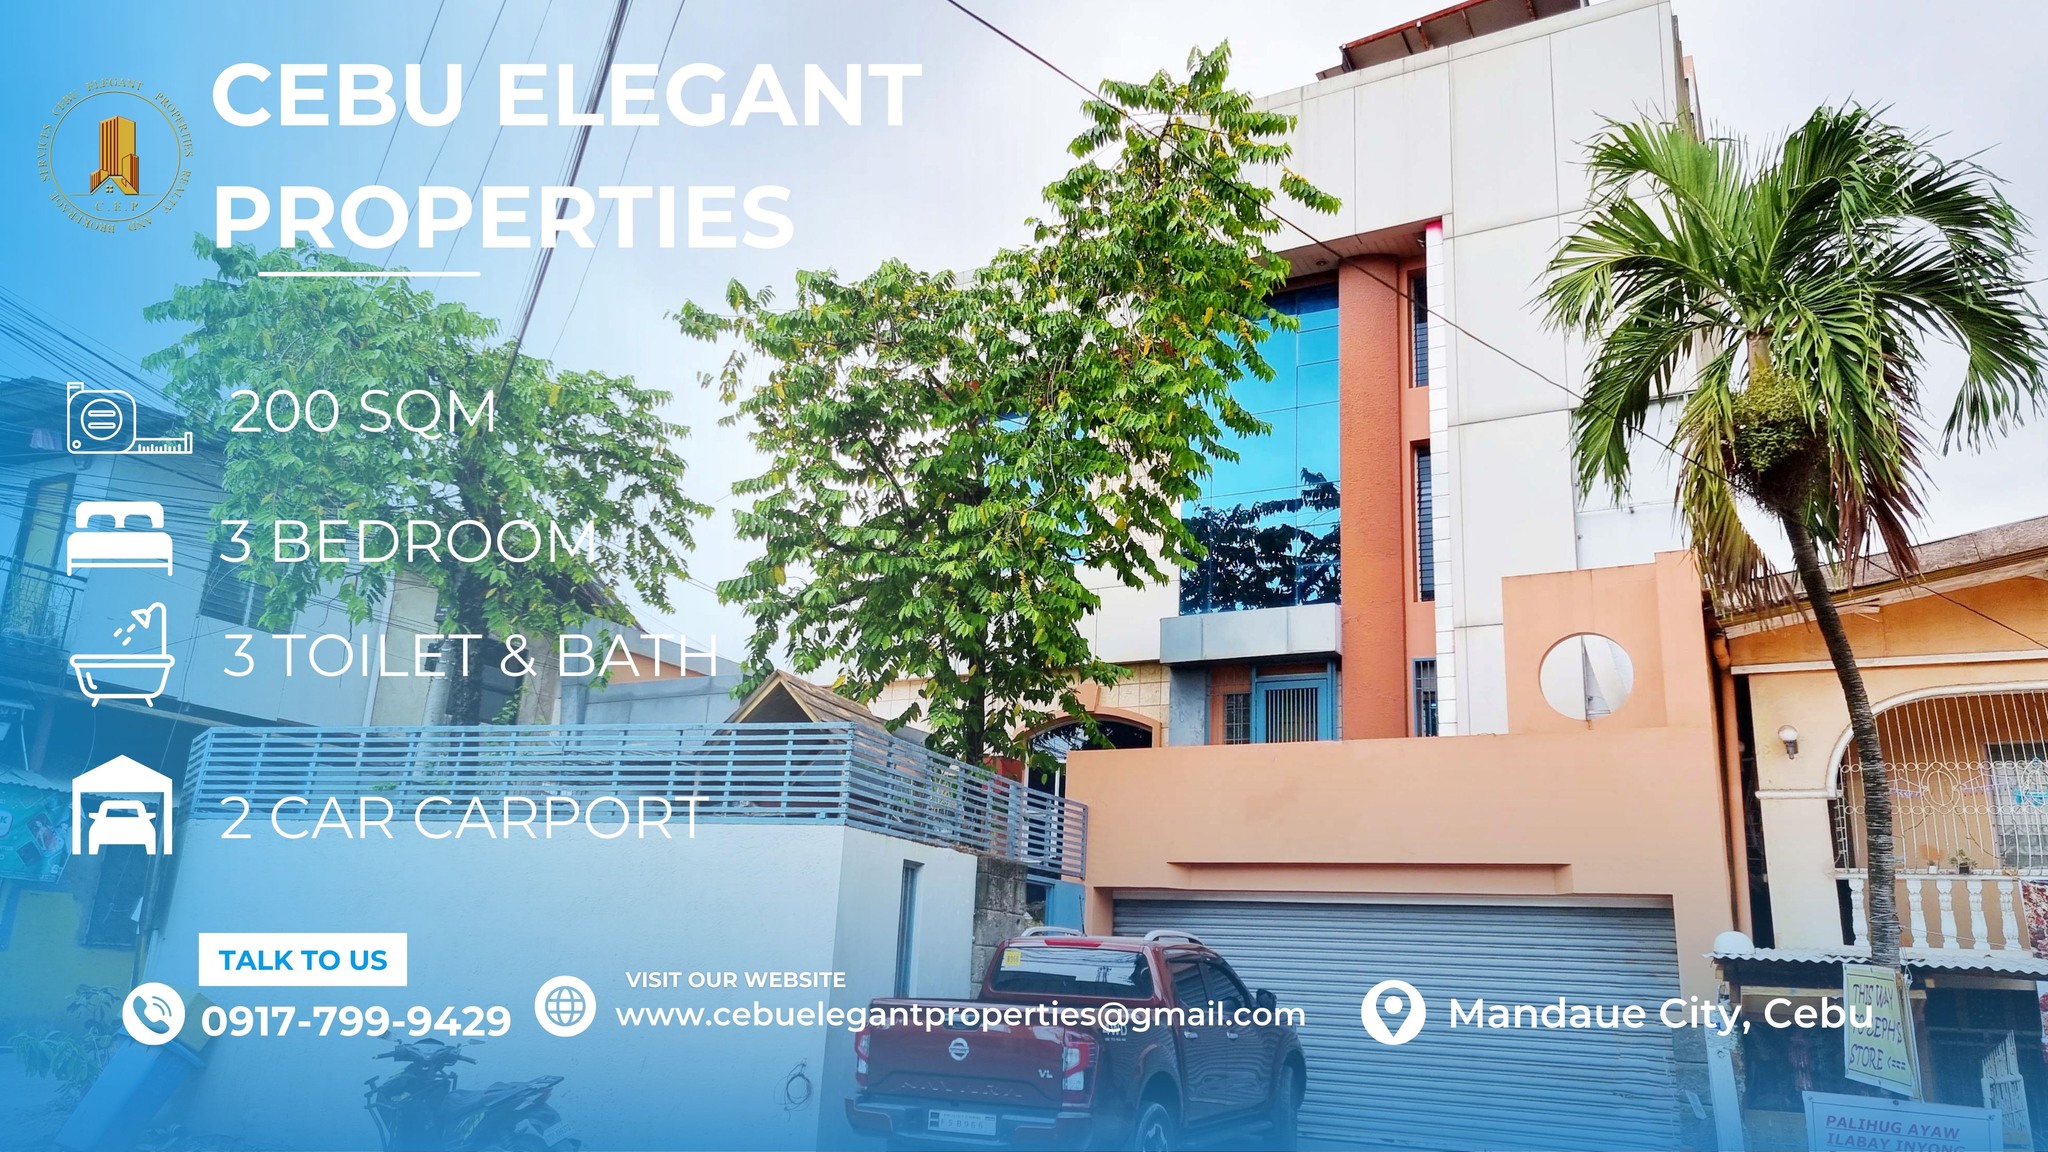 Elegant Modern House and Lot For Sale in Mandaue City, Cebu!